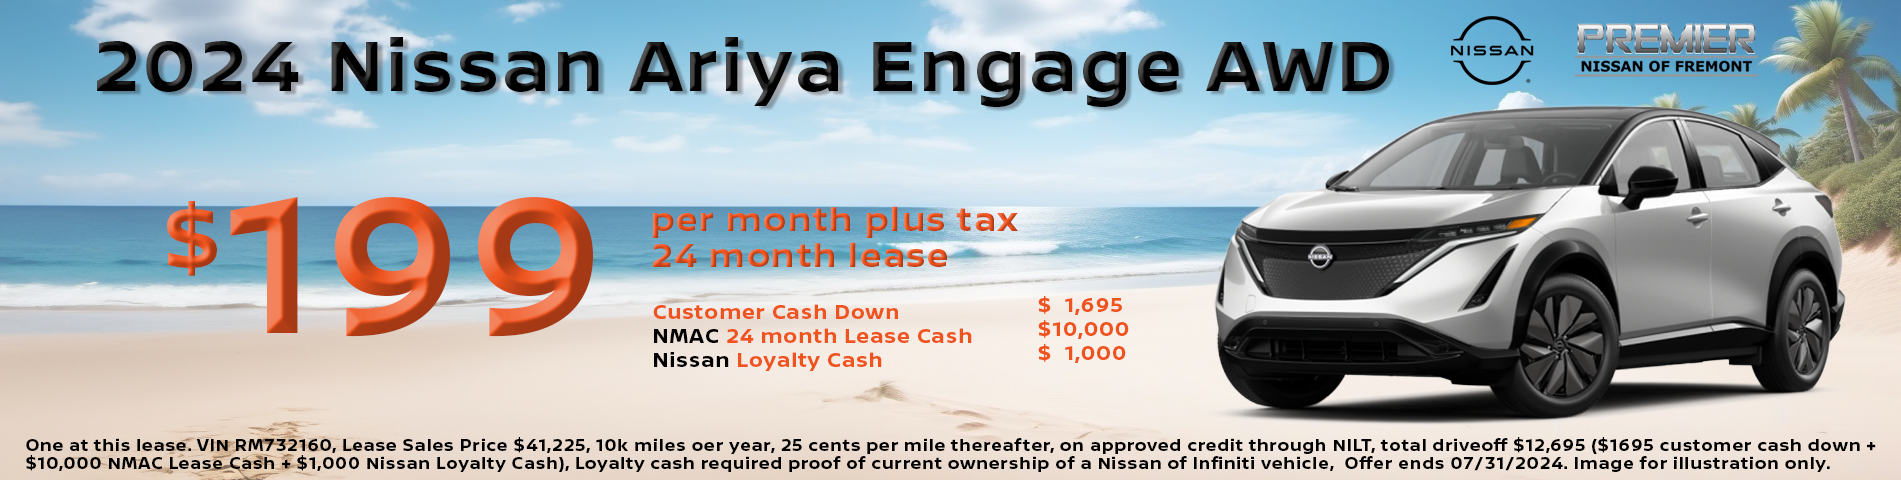 2024 Nissan Ariya Engage for $149 per month